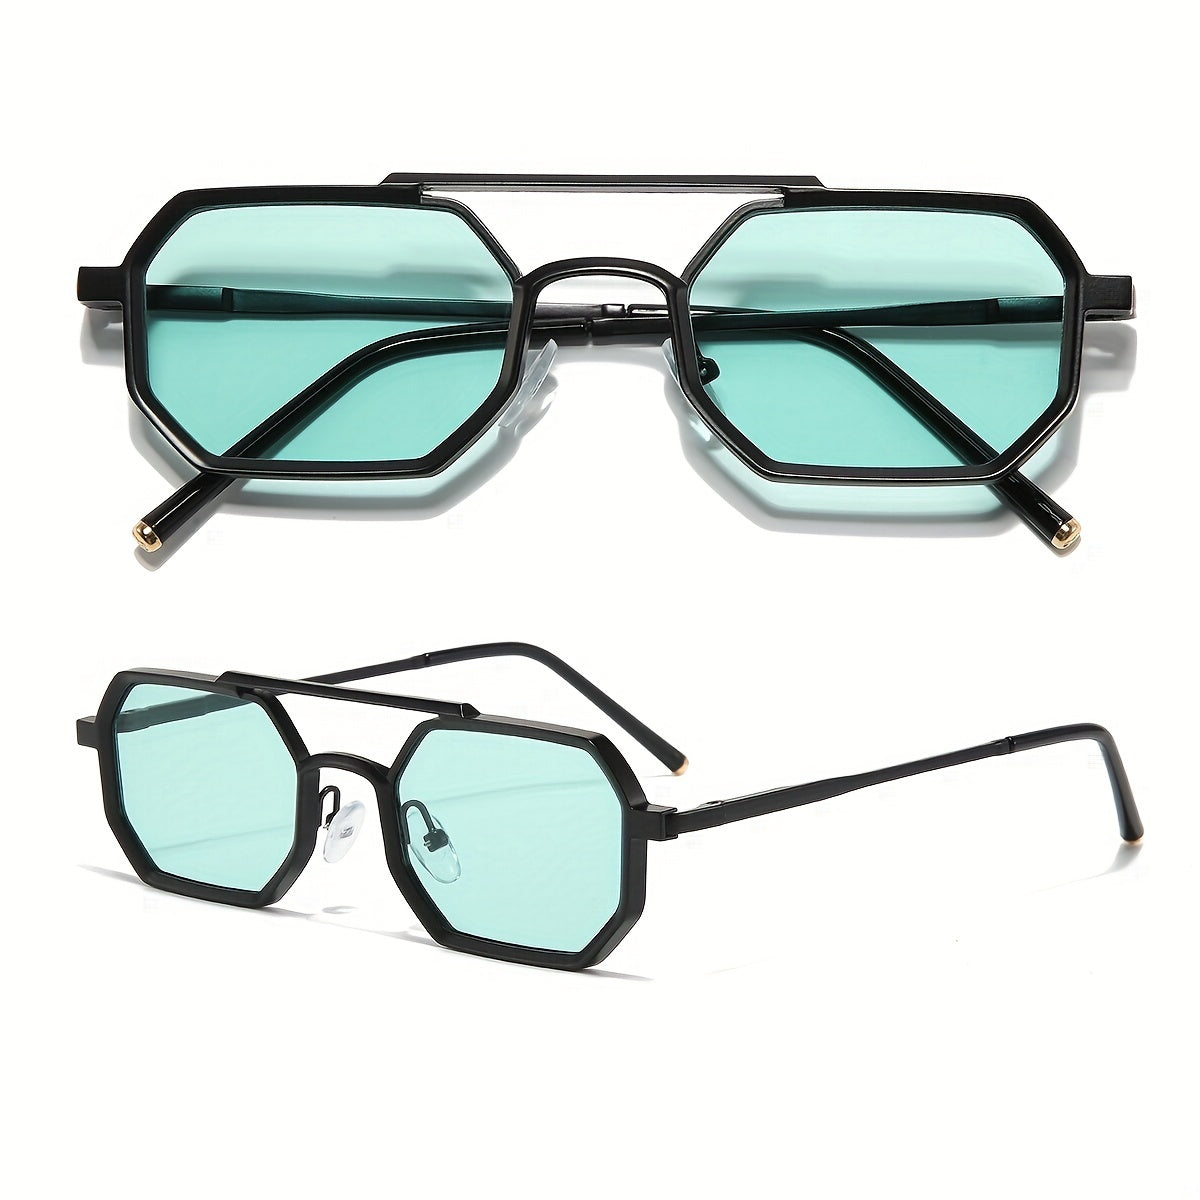 Retro Steampunk Sunglasses: Versatile Style for Men, Durable Design